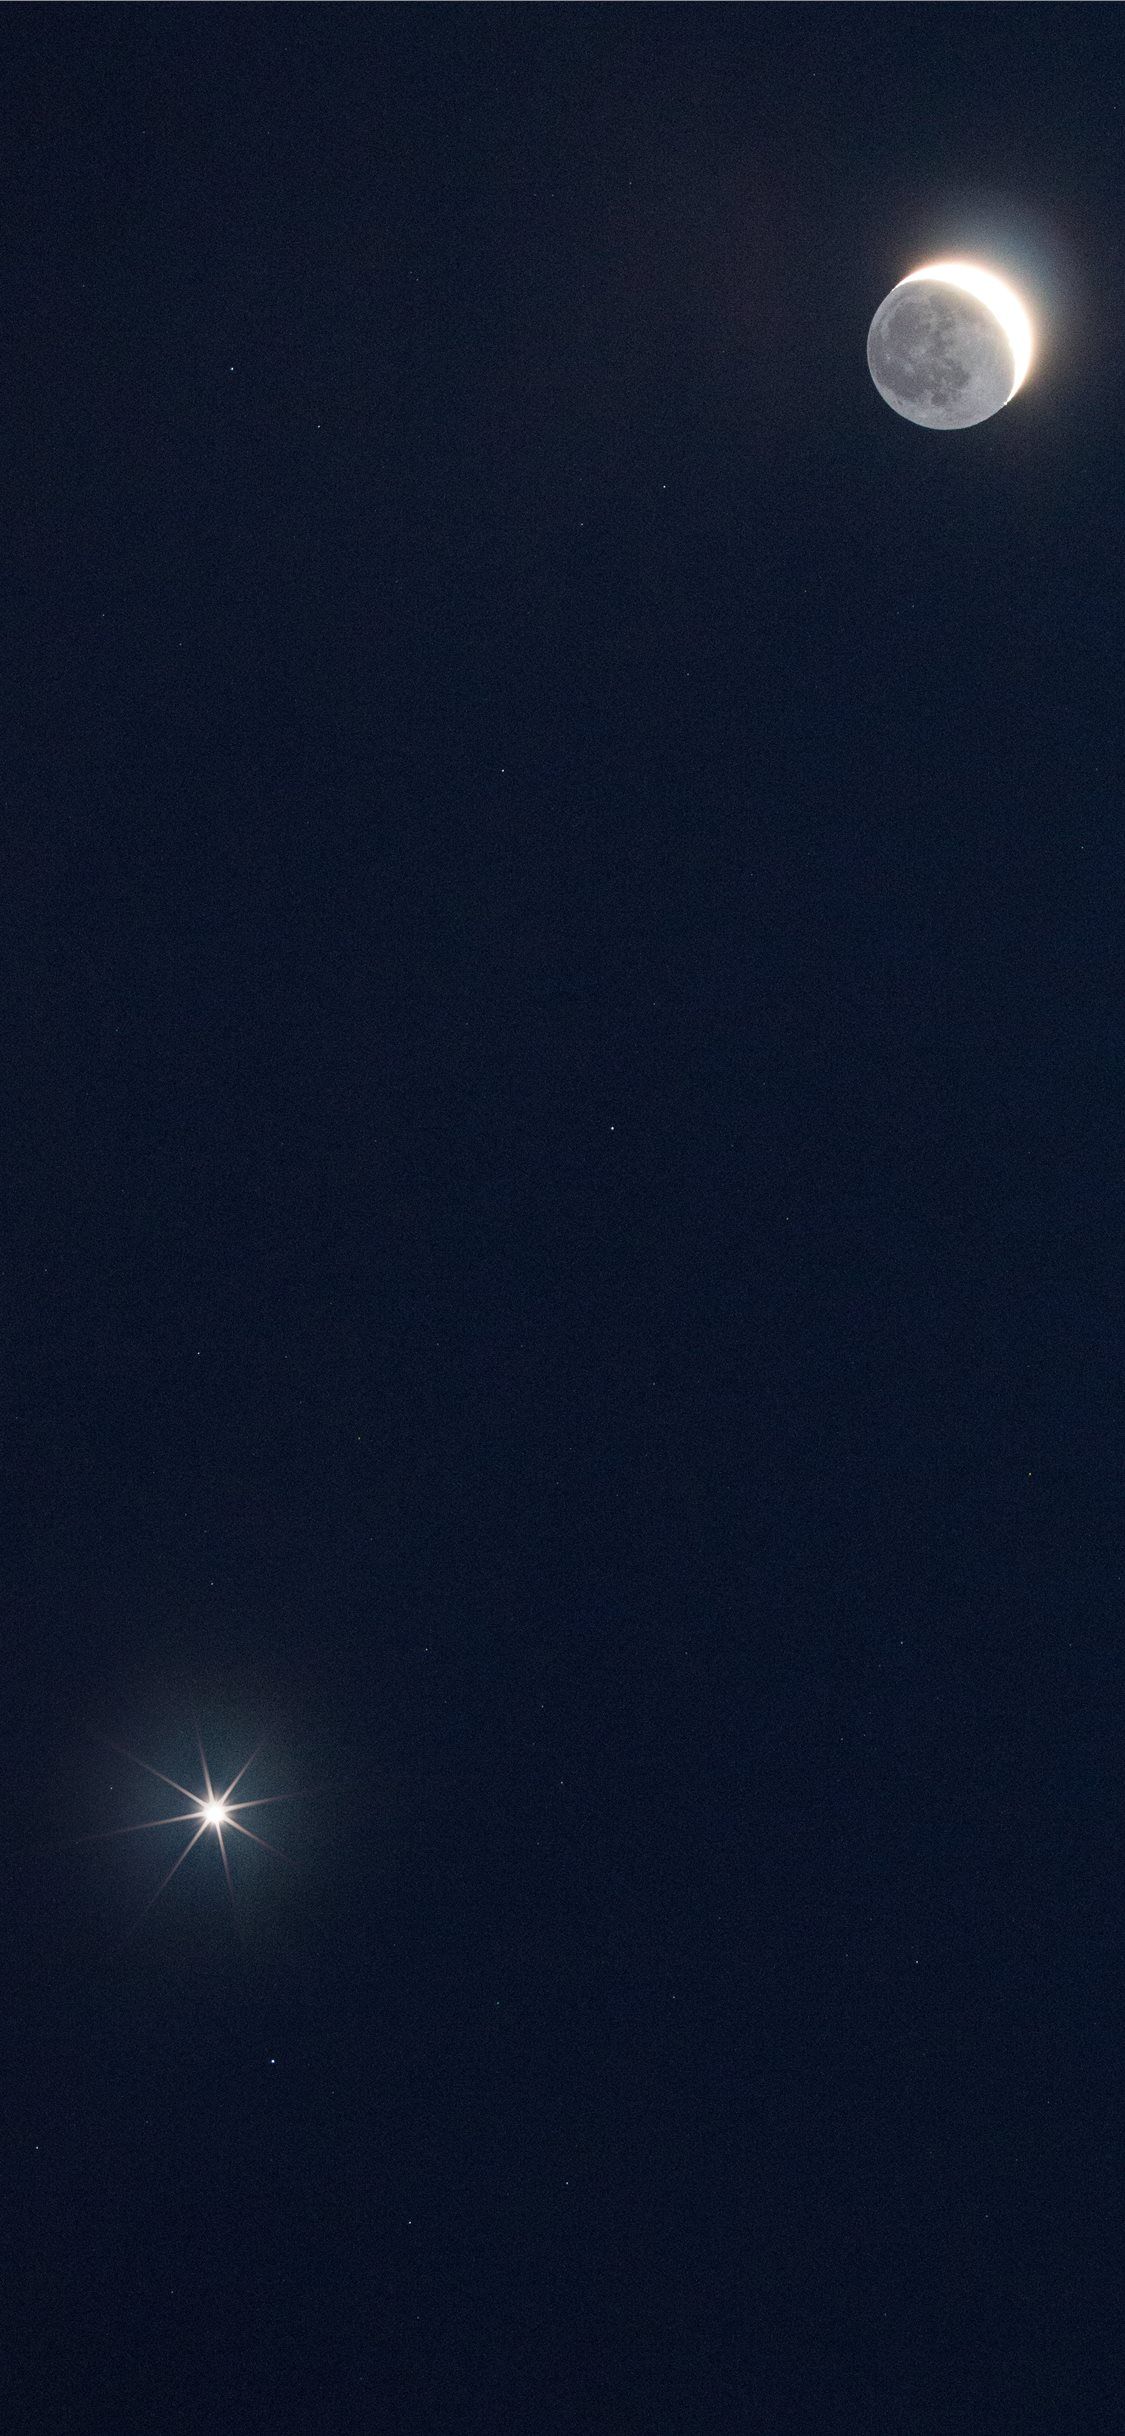 Moon and Venus iPhone X Wallpaper Free Download